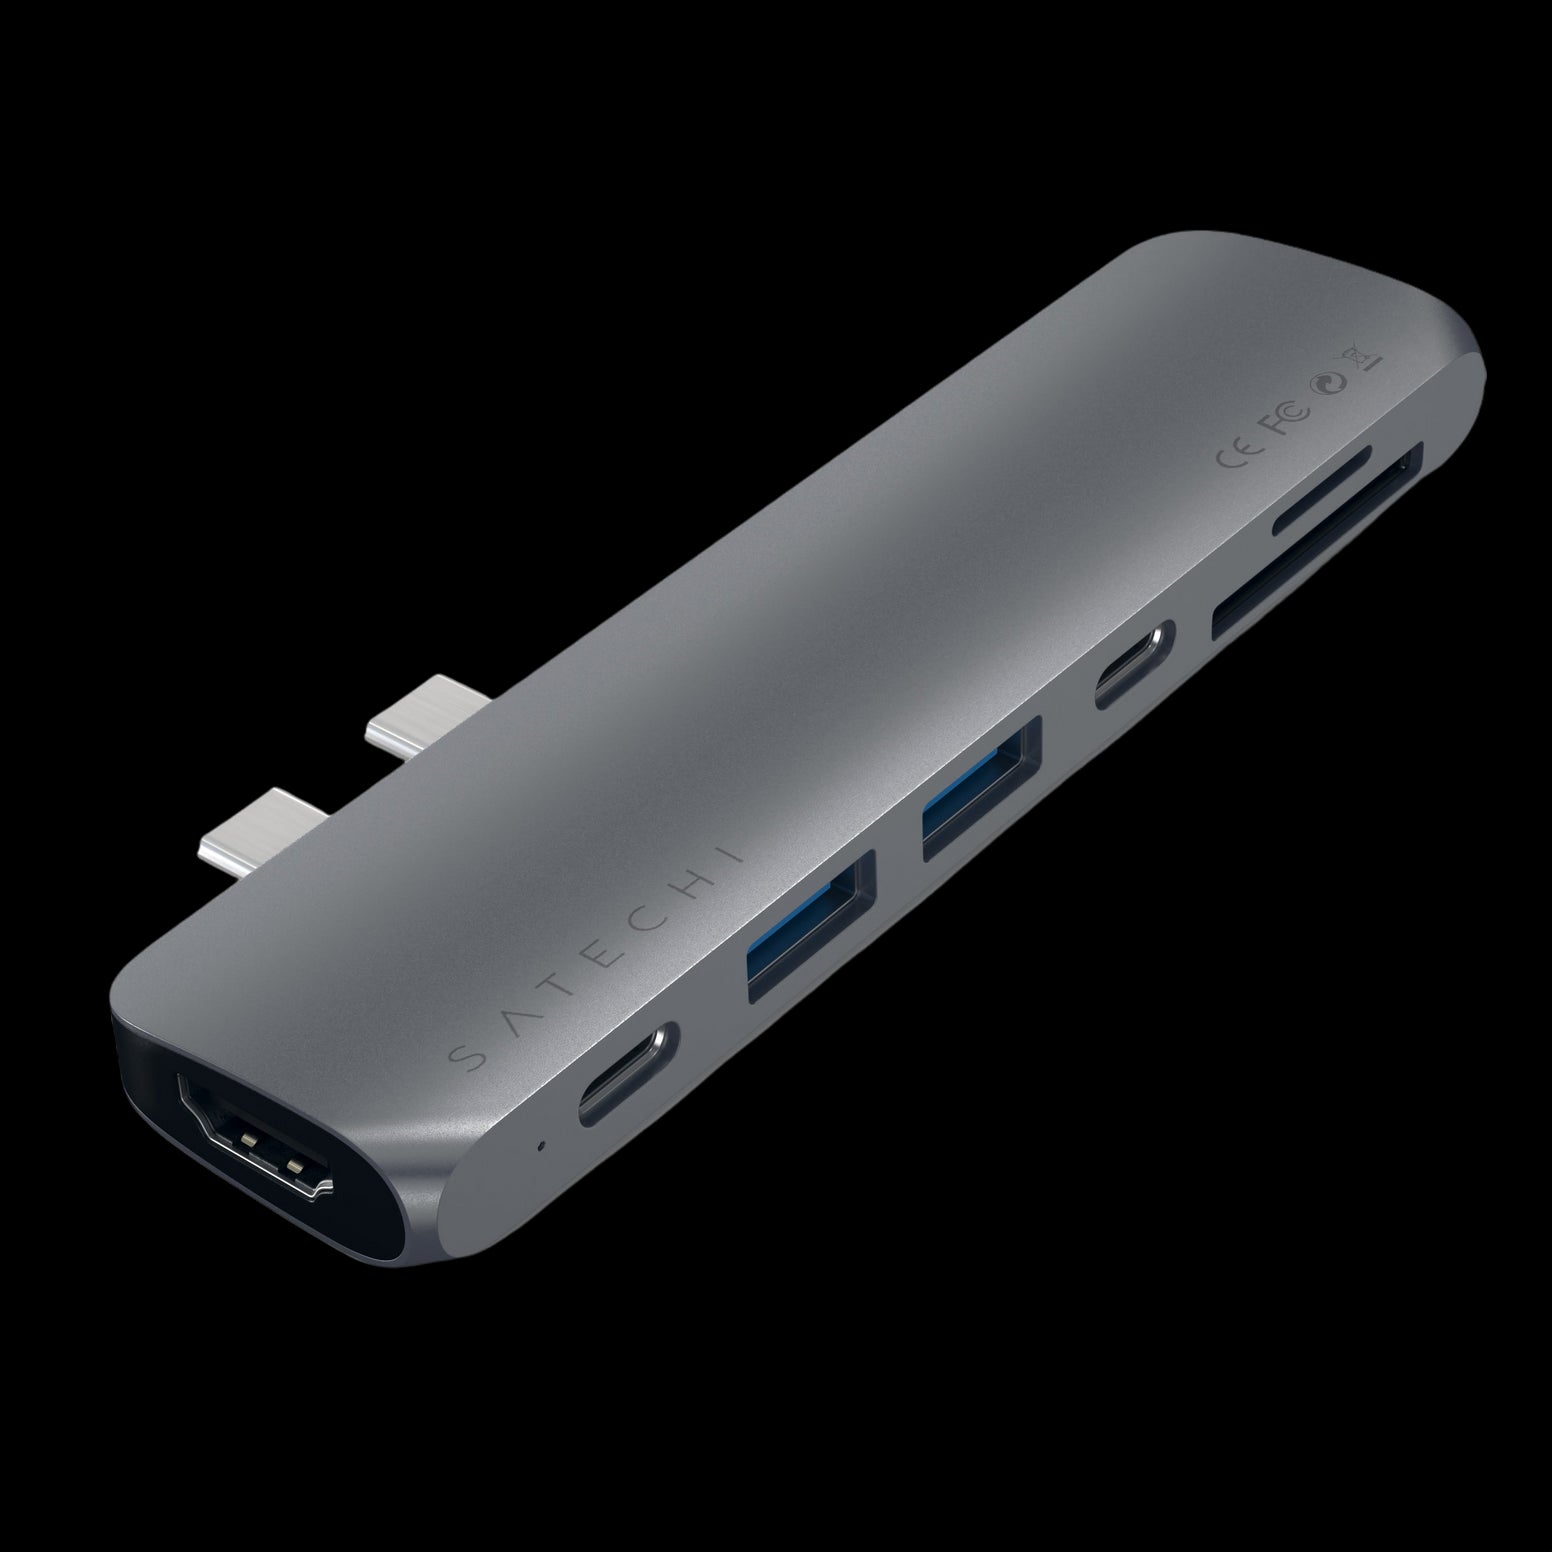 Satechi Aluminium Pro Hub Multi-Port USB-C Dock Adapter - Space Grey